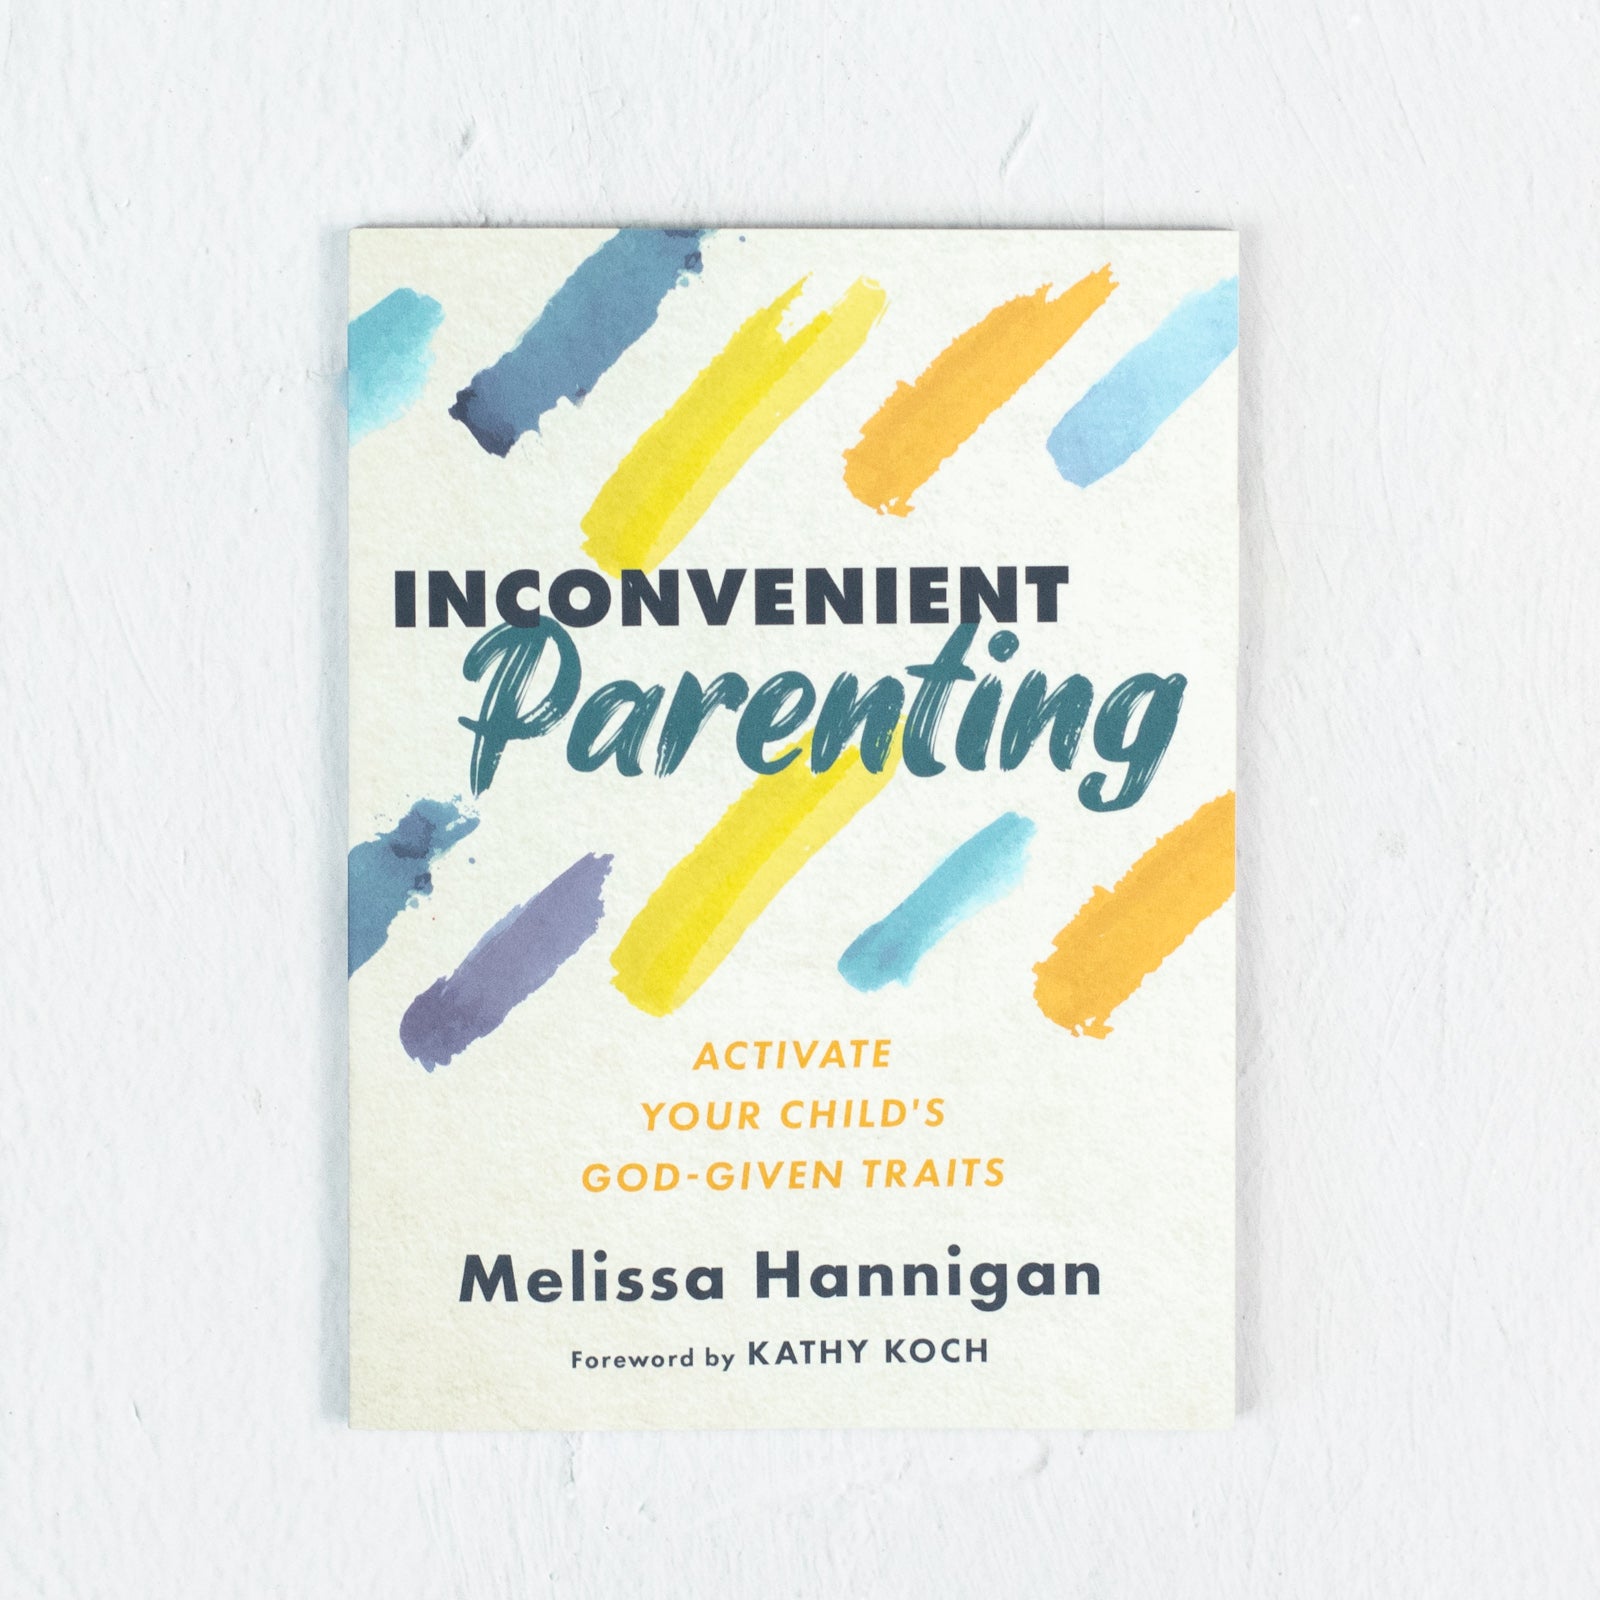 Inconvenient Parenting